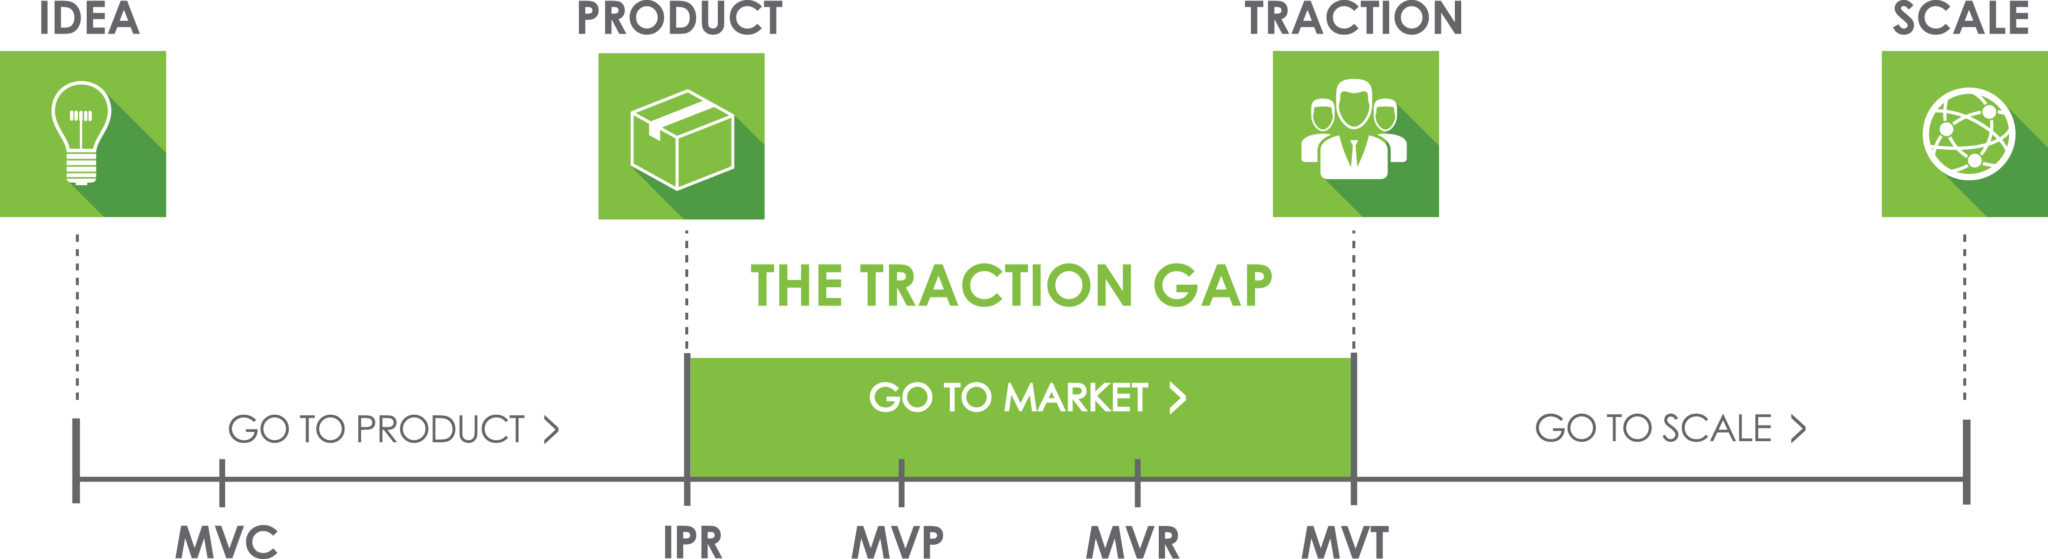 Traction Gap framework diagram